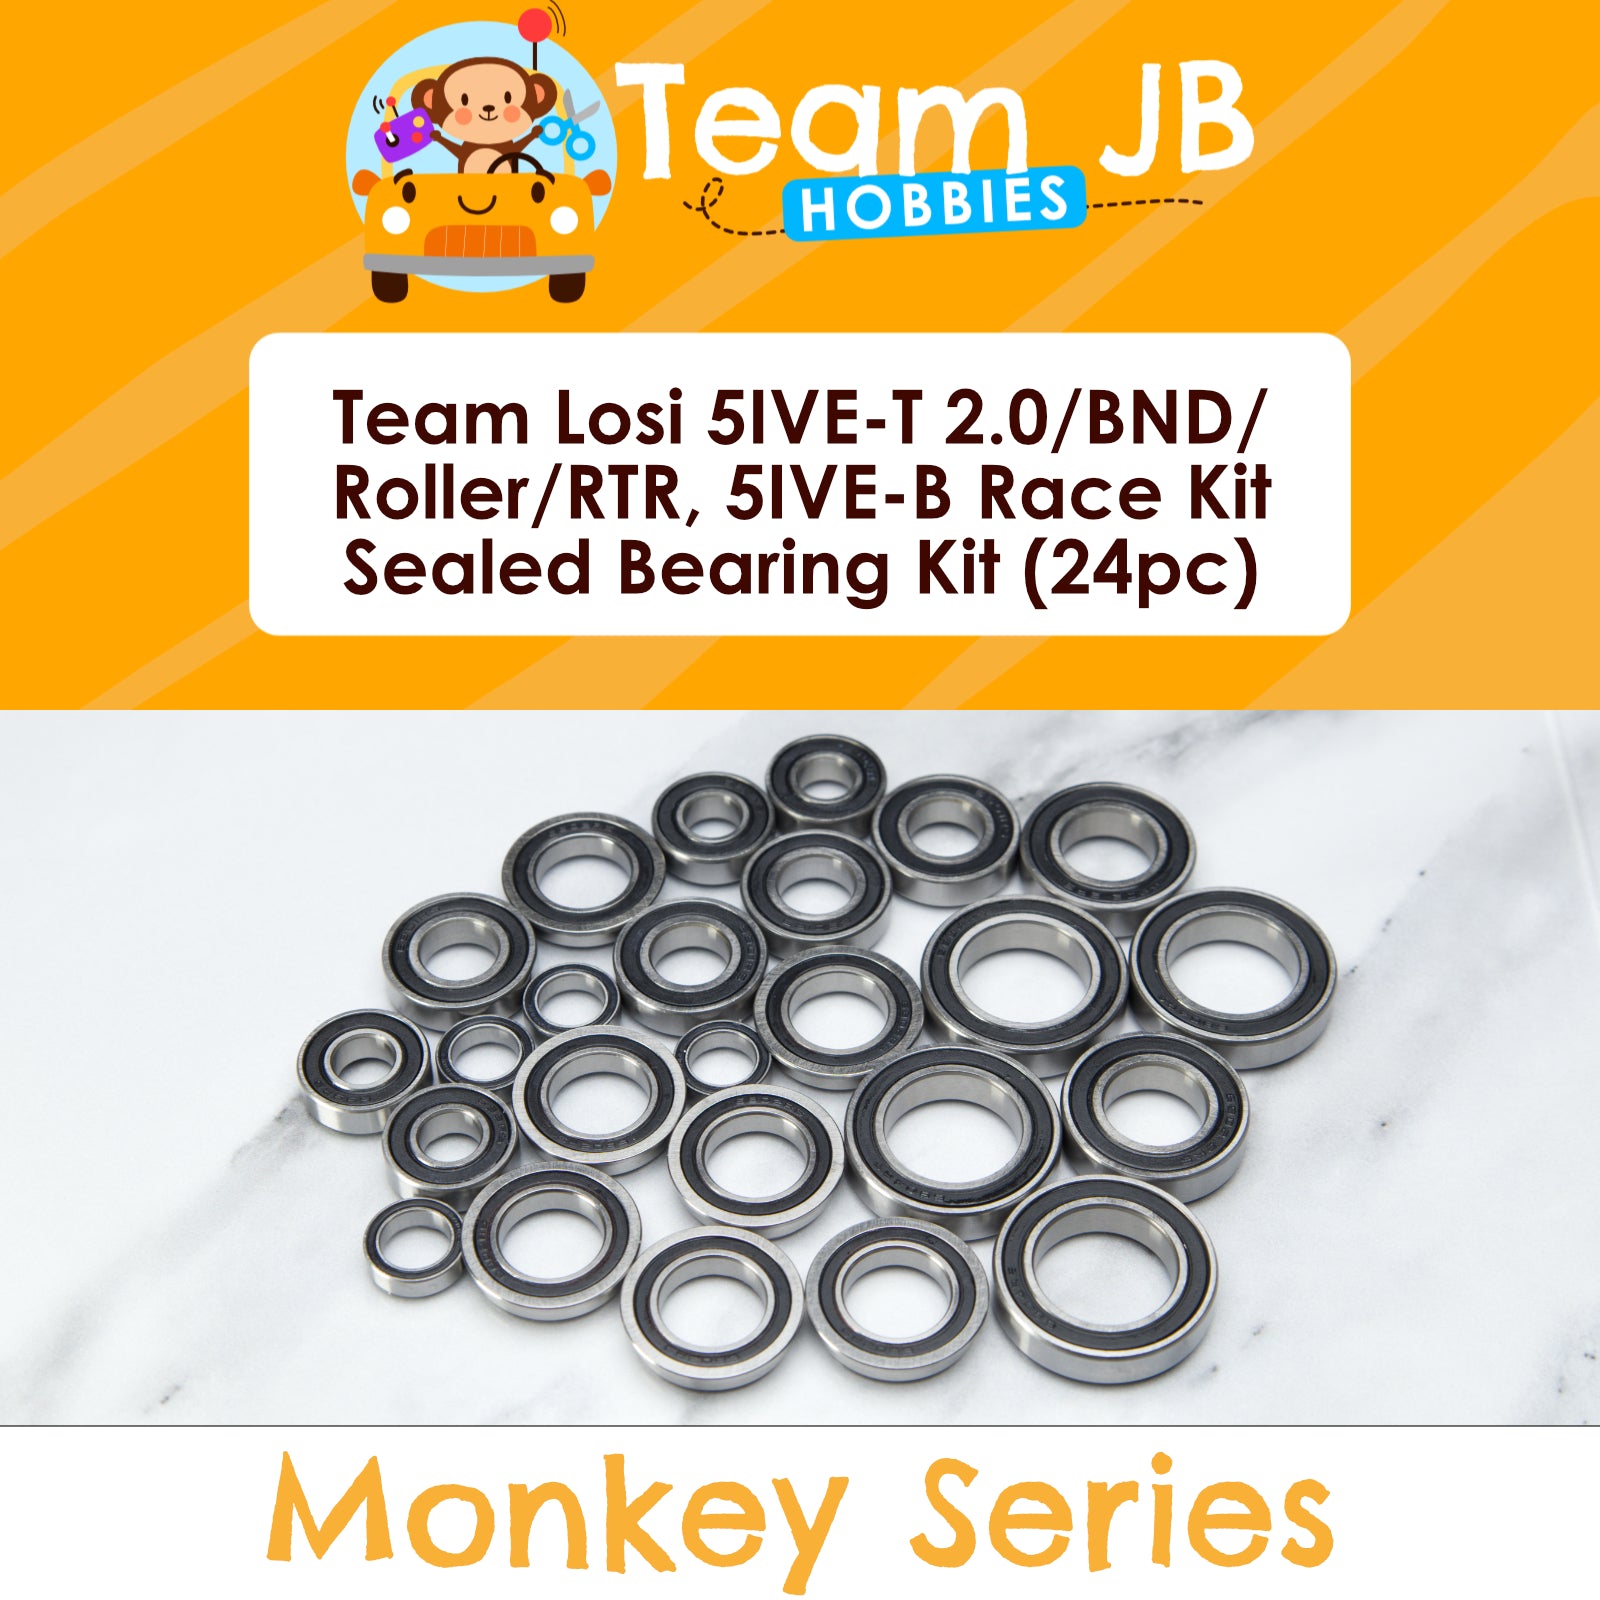 Team Losi 5IVE-T 2.0/BND/Roller/RTR, 5IVE-B Race Kit - Sealed Bearing Kit